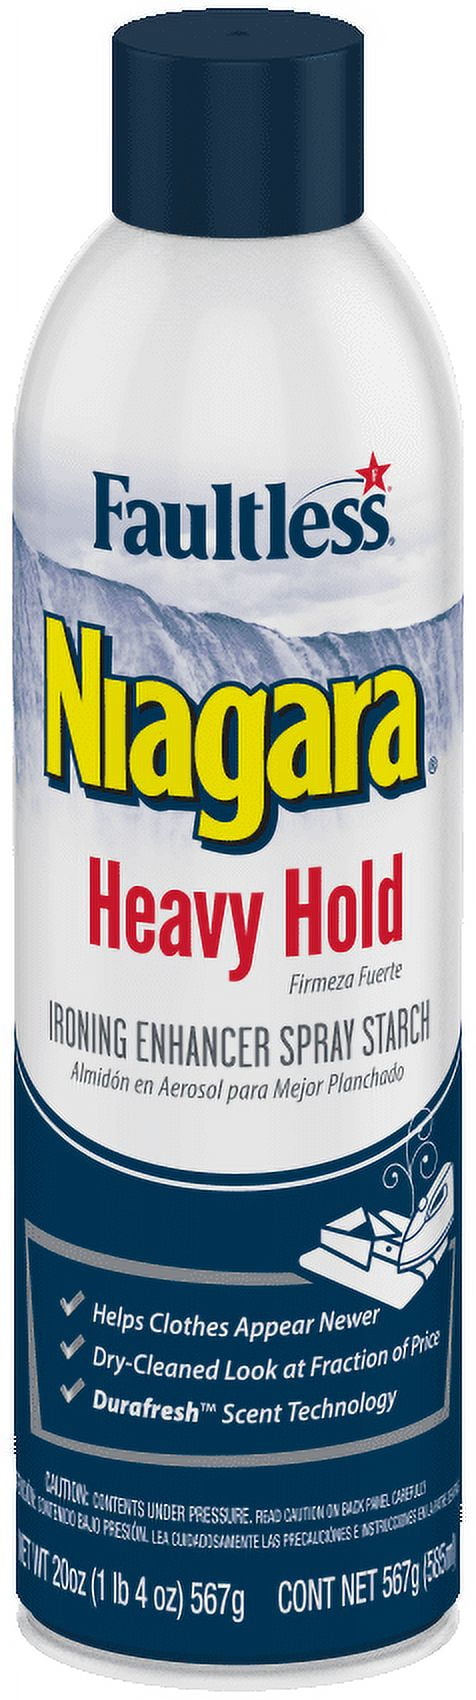 Faultless Niagara Heavy Finish Ironing Spray Starch, 20 oz